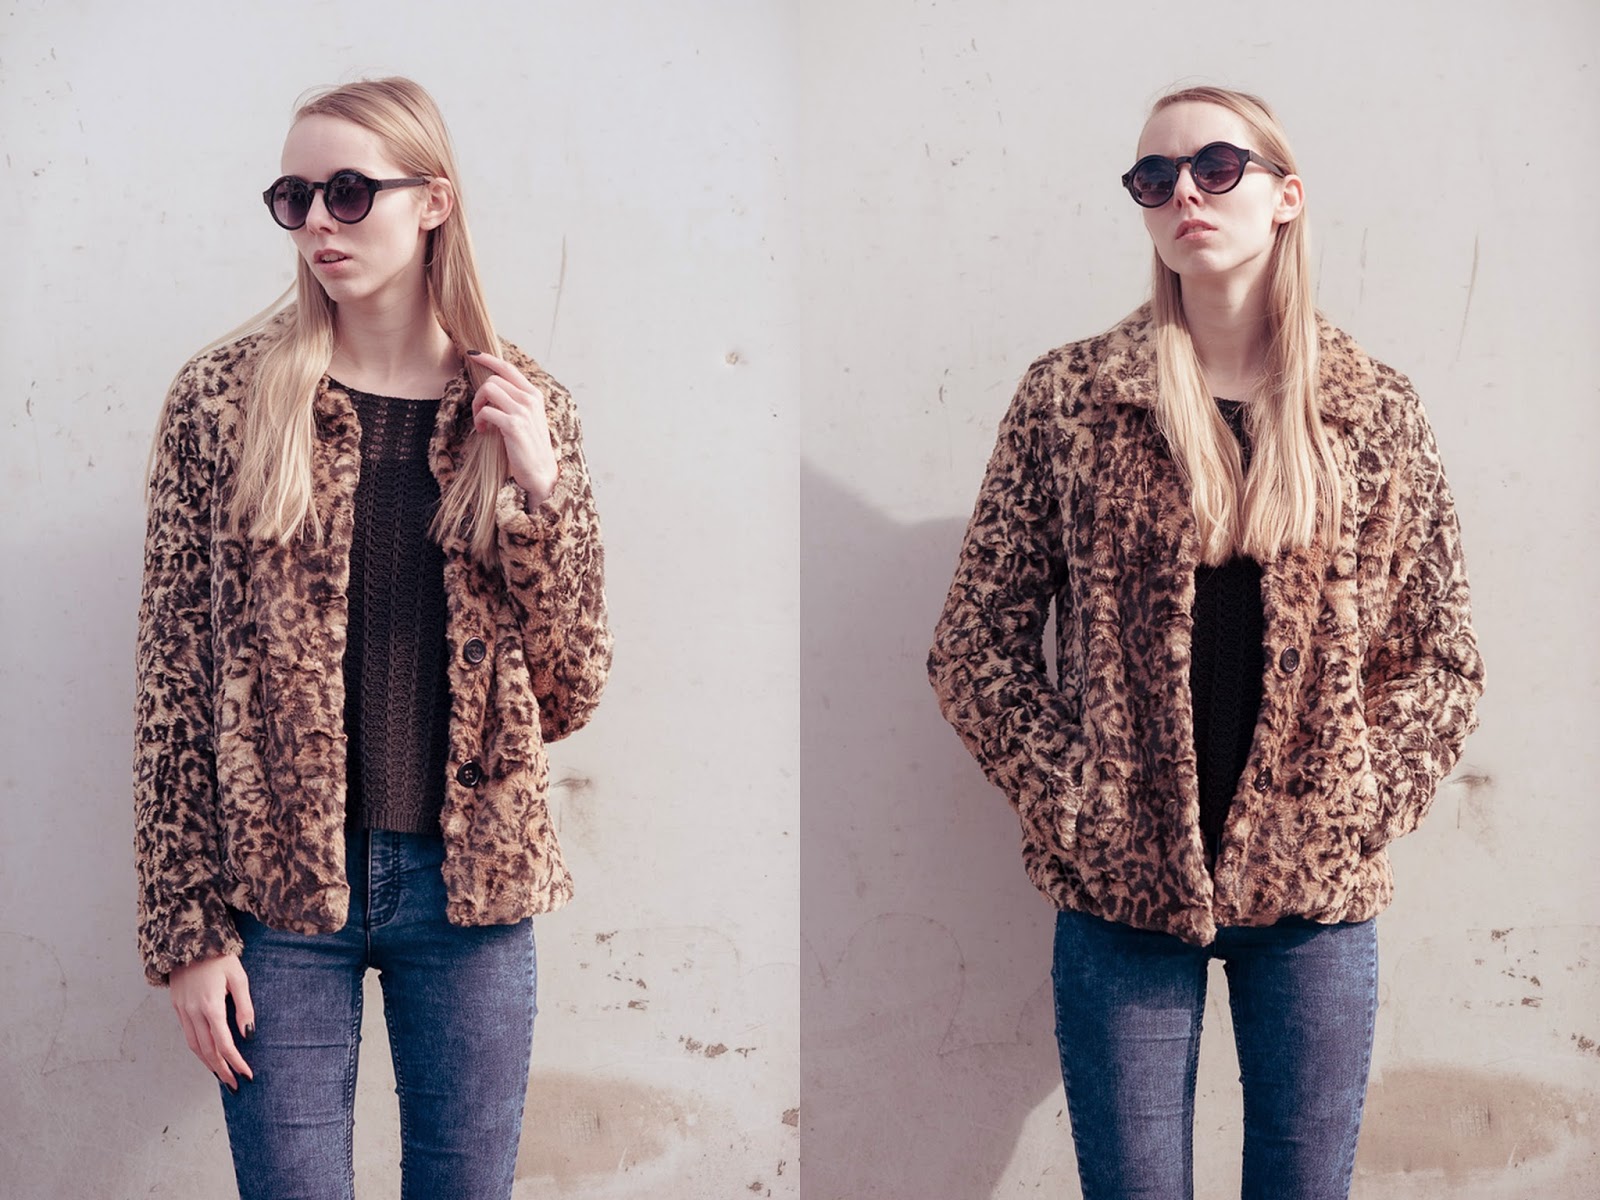 Nep bontjas panterprint fluffy jas leopard print winterjas faux fur Den Bosch fotoshoot mode blogger Mark Koolen fotografie